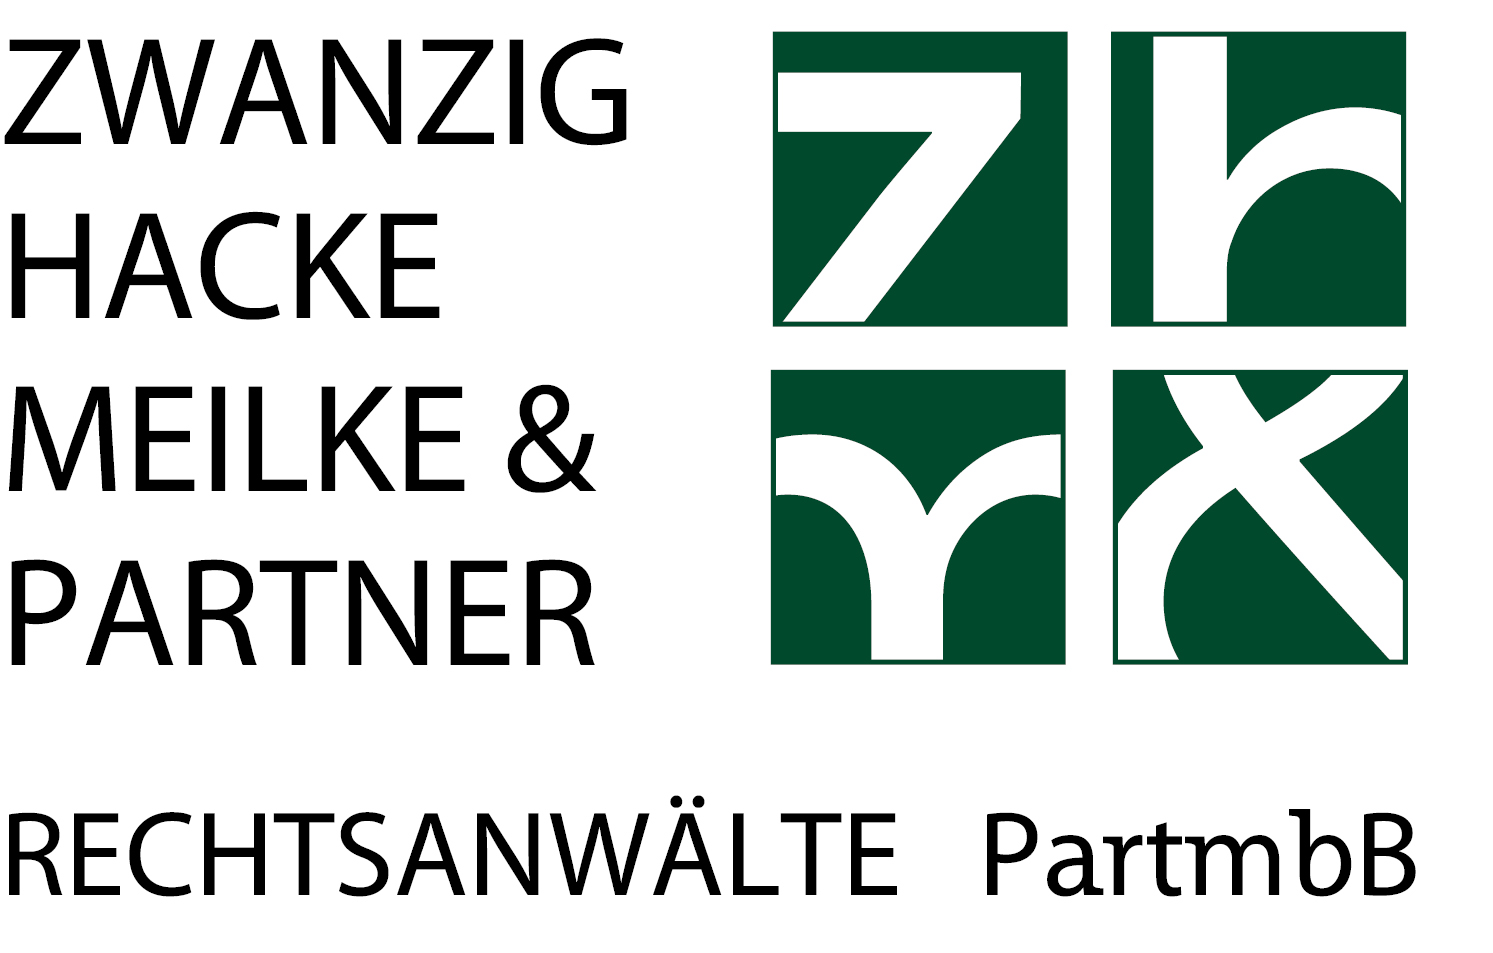 ZHMP logo